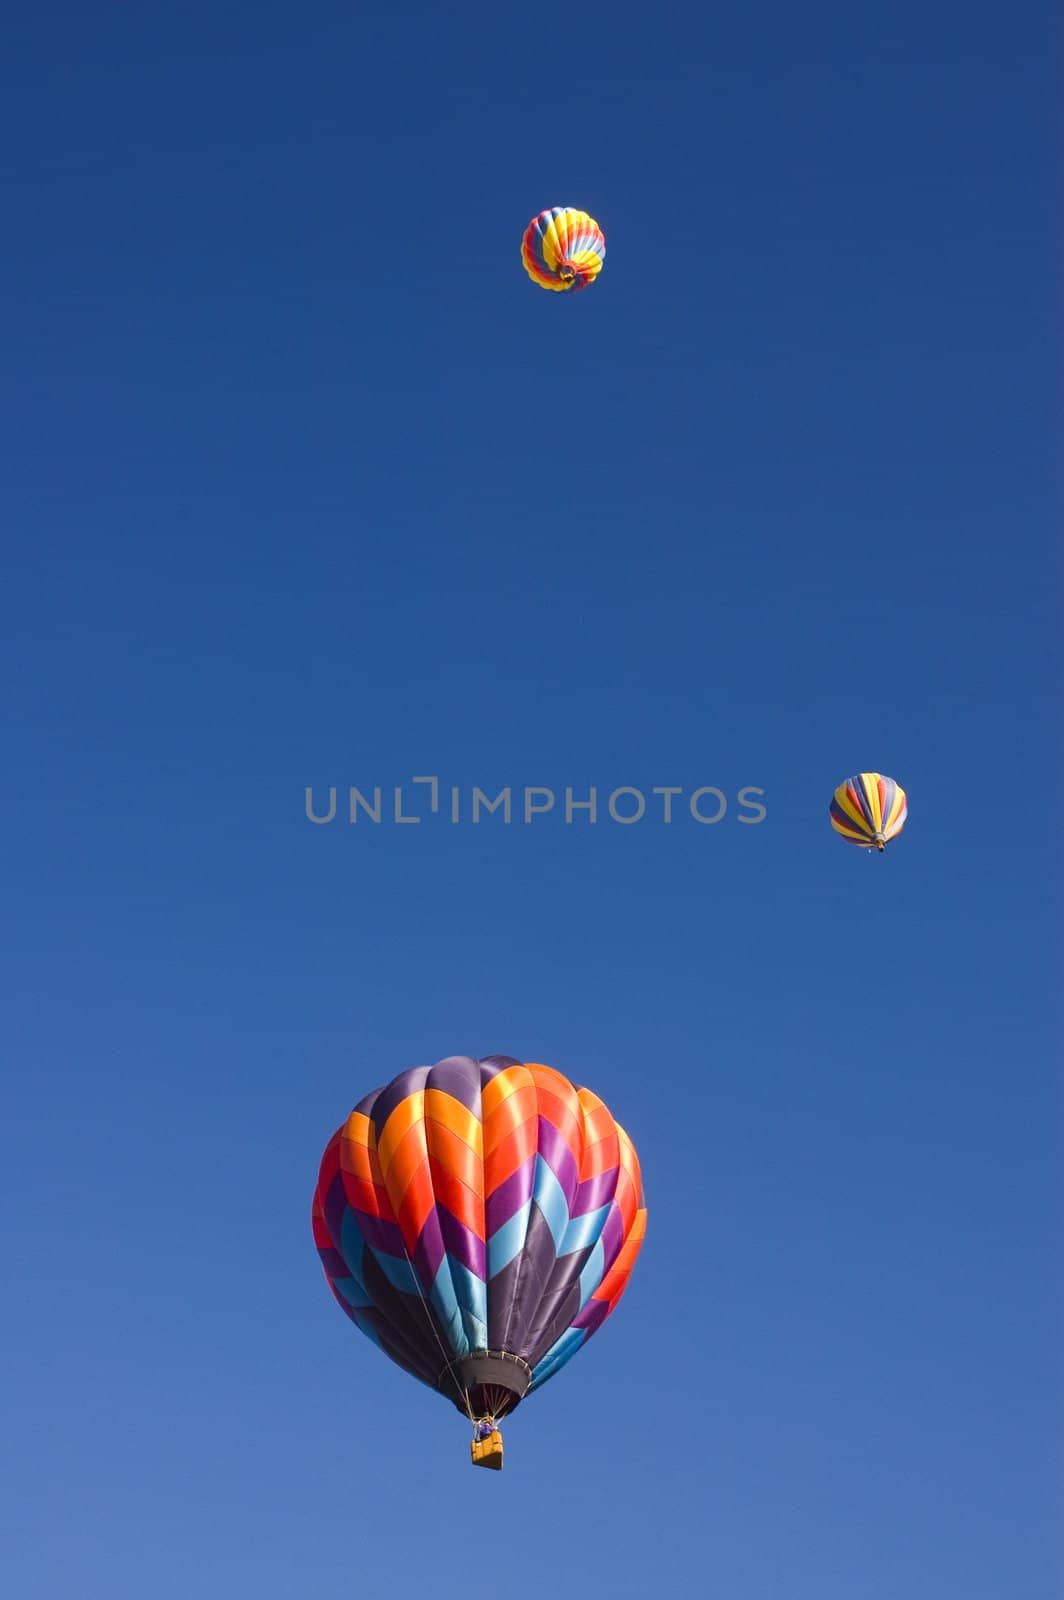 three of the balloons at the Taos balloon festival sailing upwards into a deep blue sky